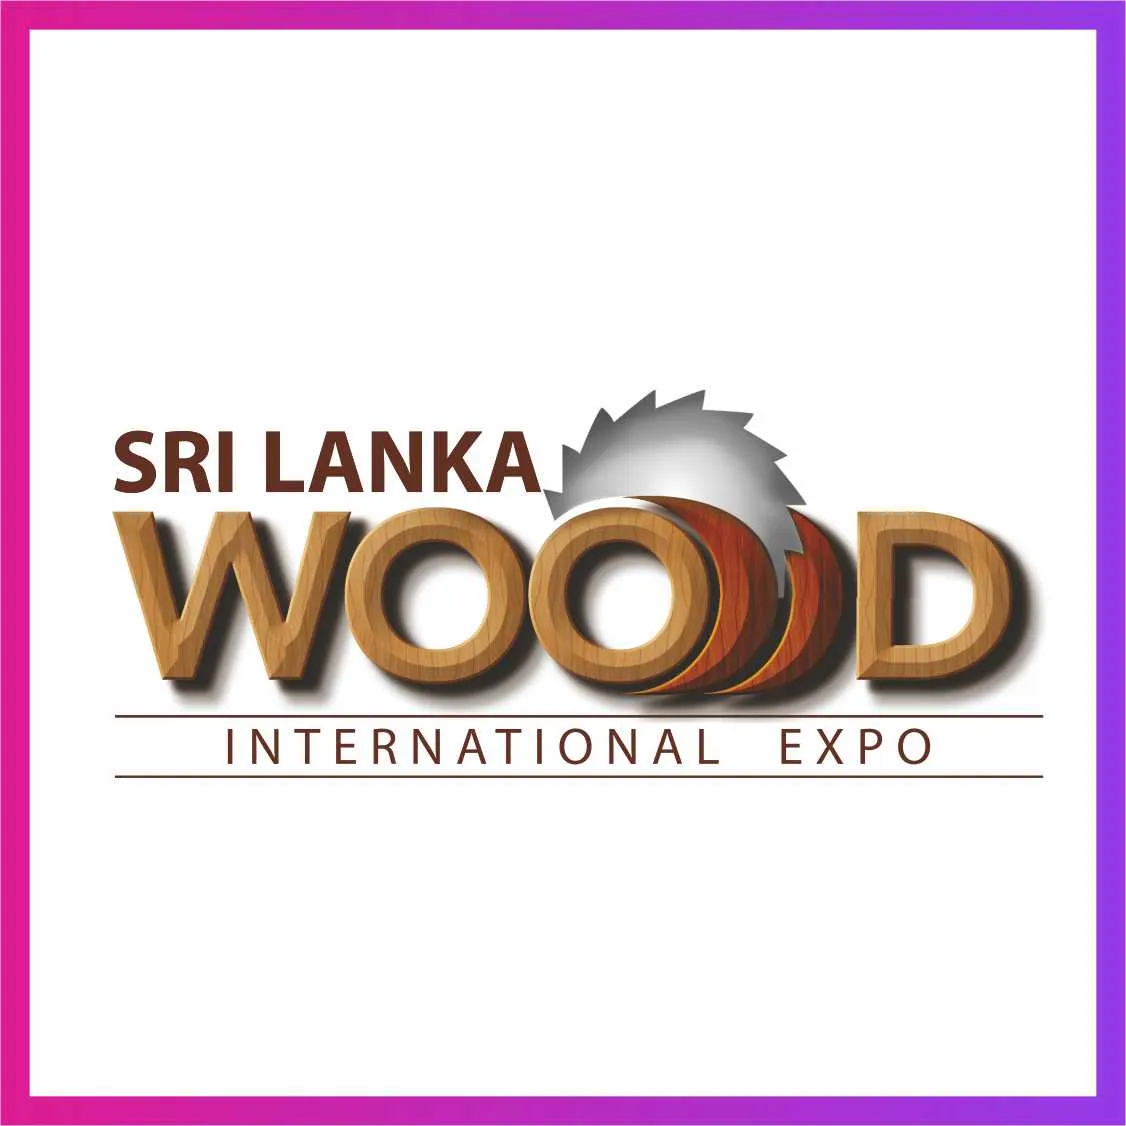 Srilanka Wood International EXPO 2014